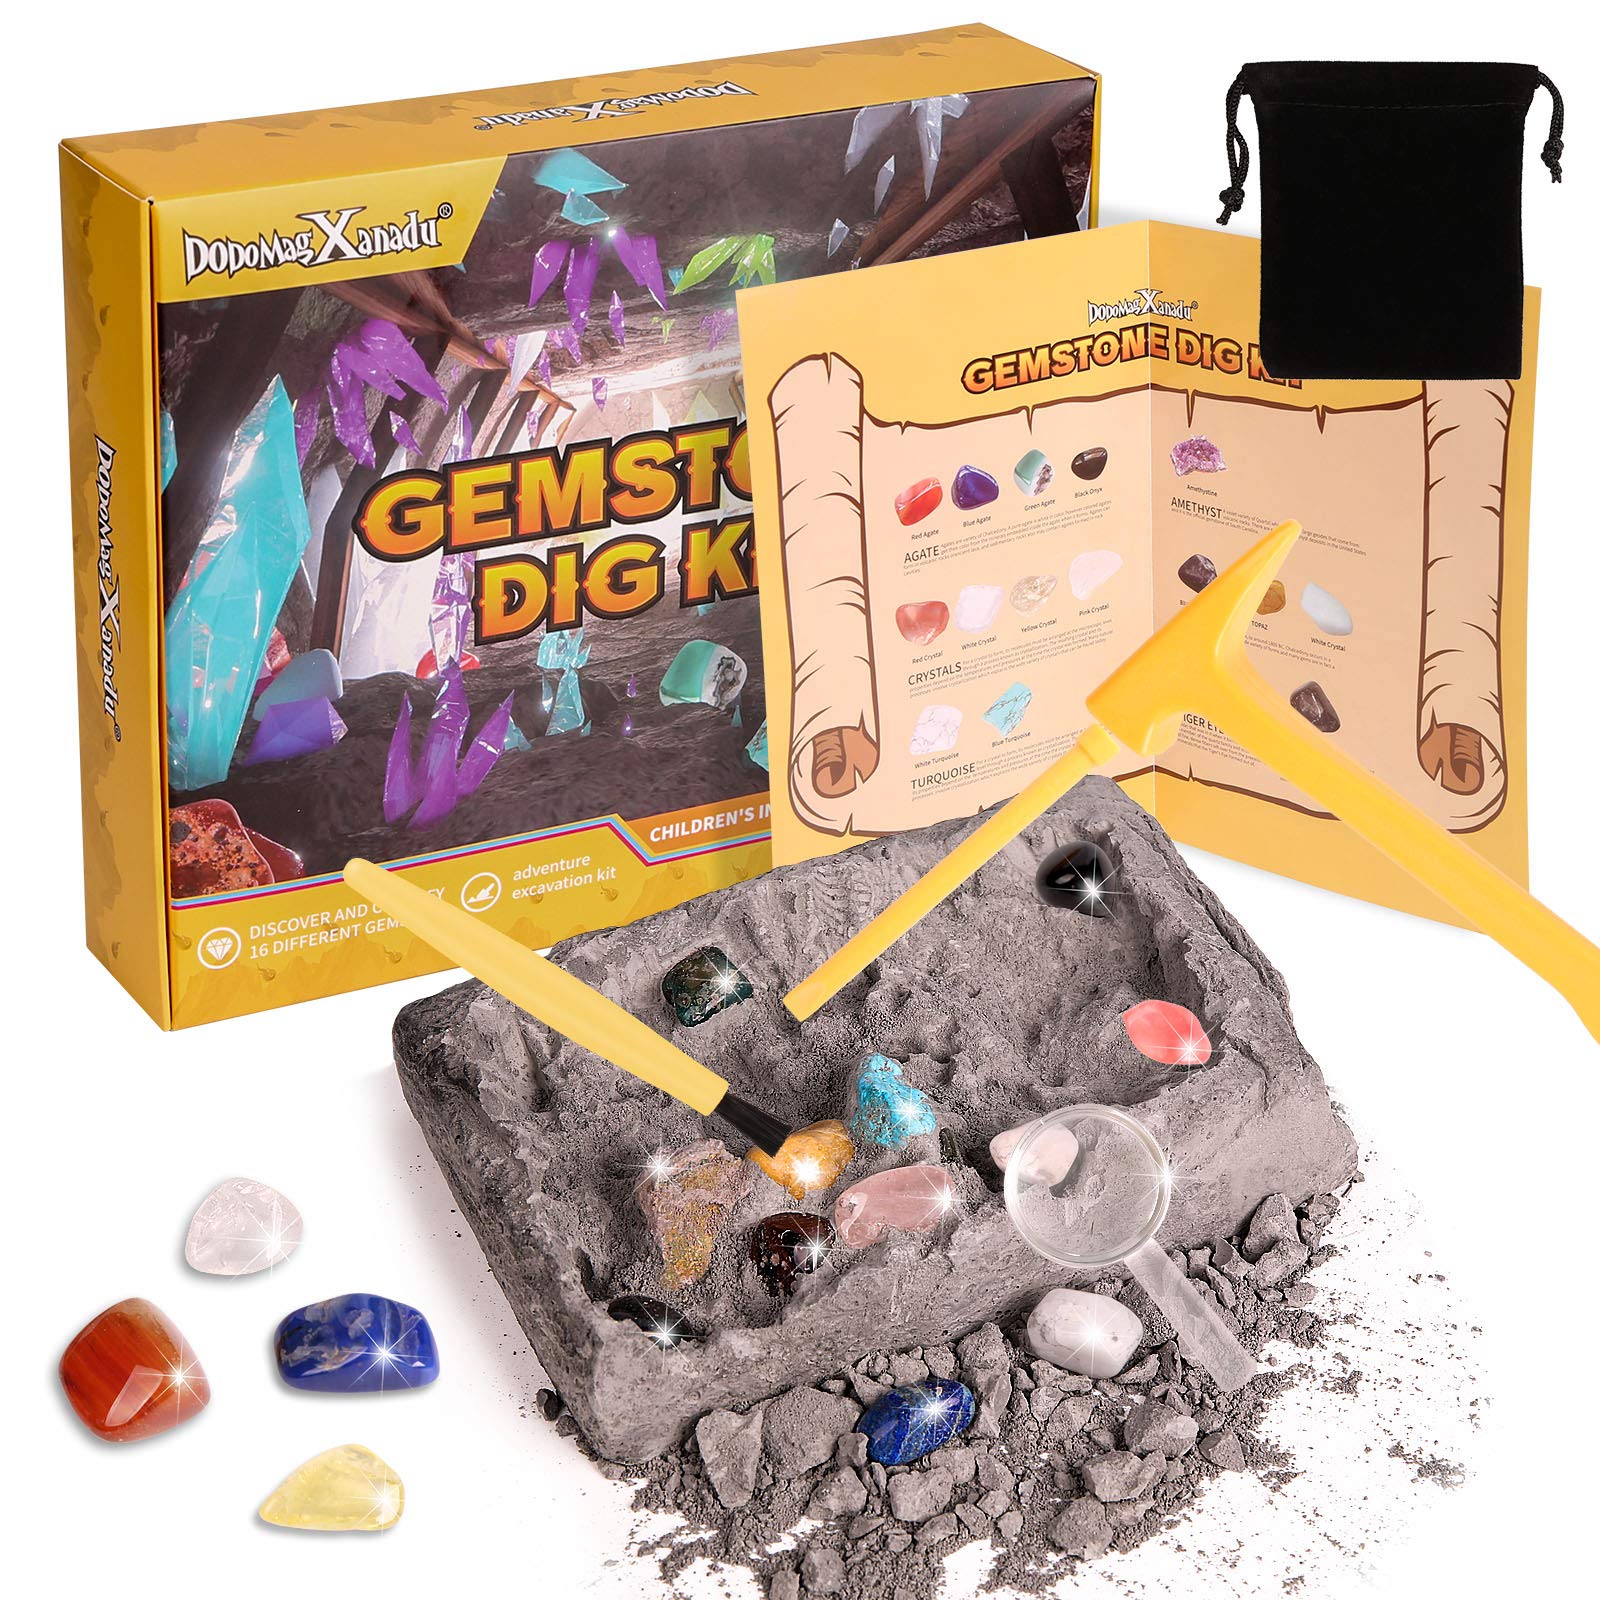 Gemstone Dig Kit, 16 Real Gem Stones Excavation Kit, STEM Educational Toys Science Kits, Rock and Geology Easter Basket Stuffers Toys Gift for Girls Boys